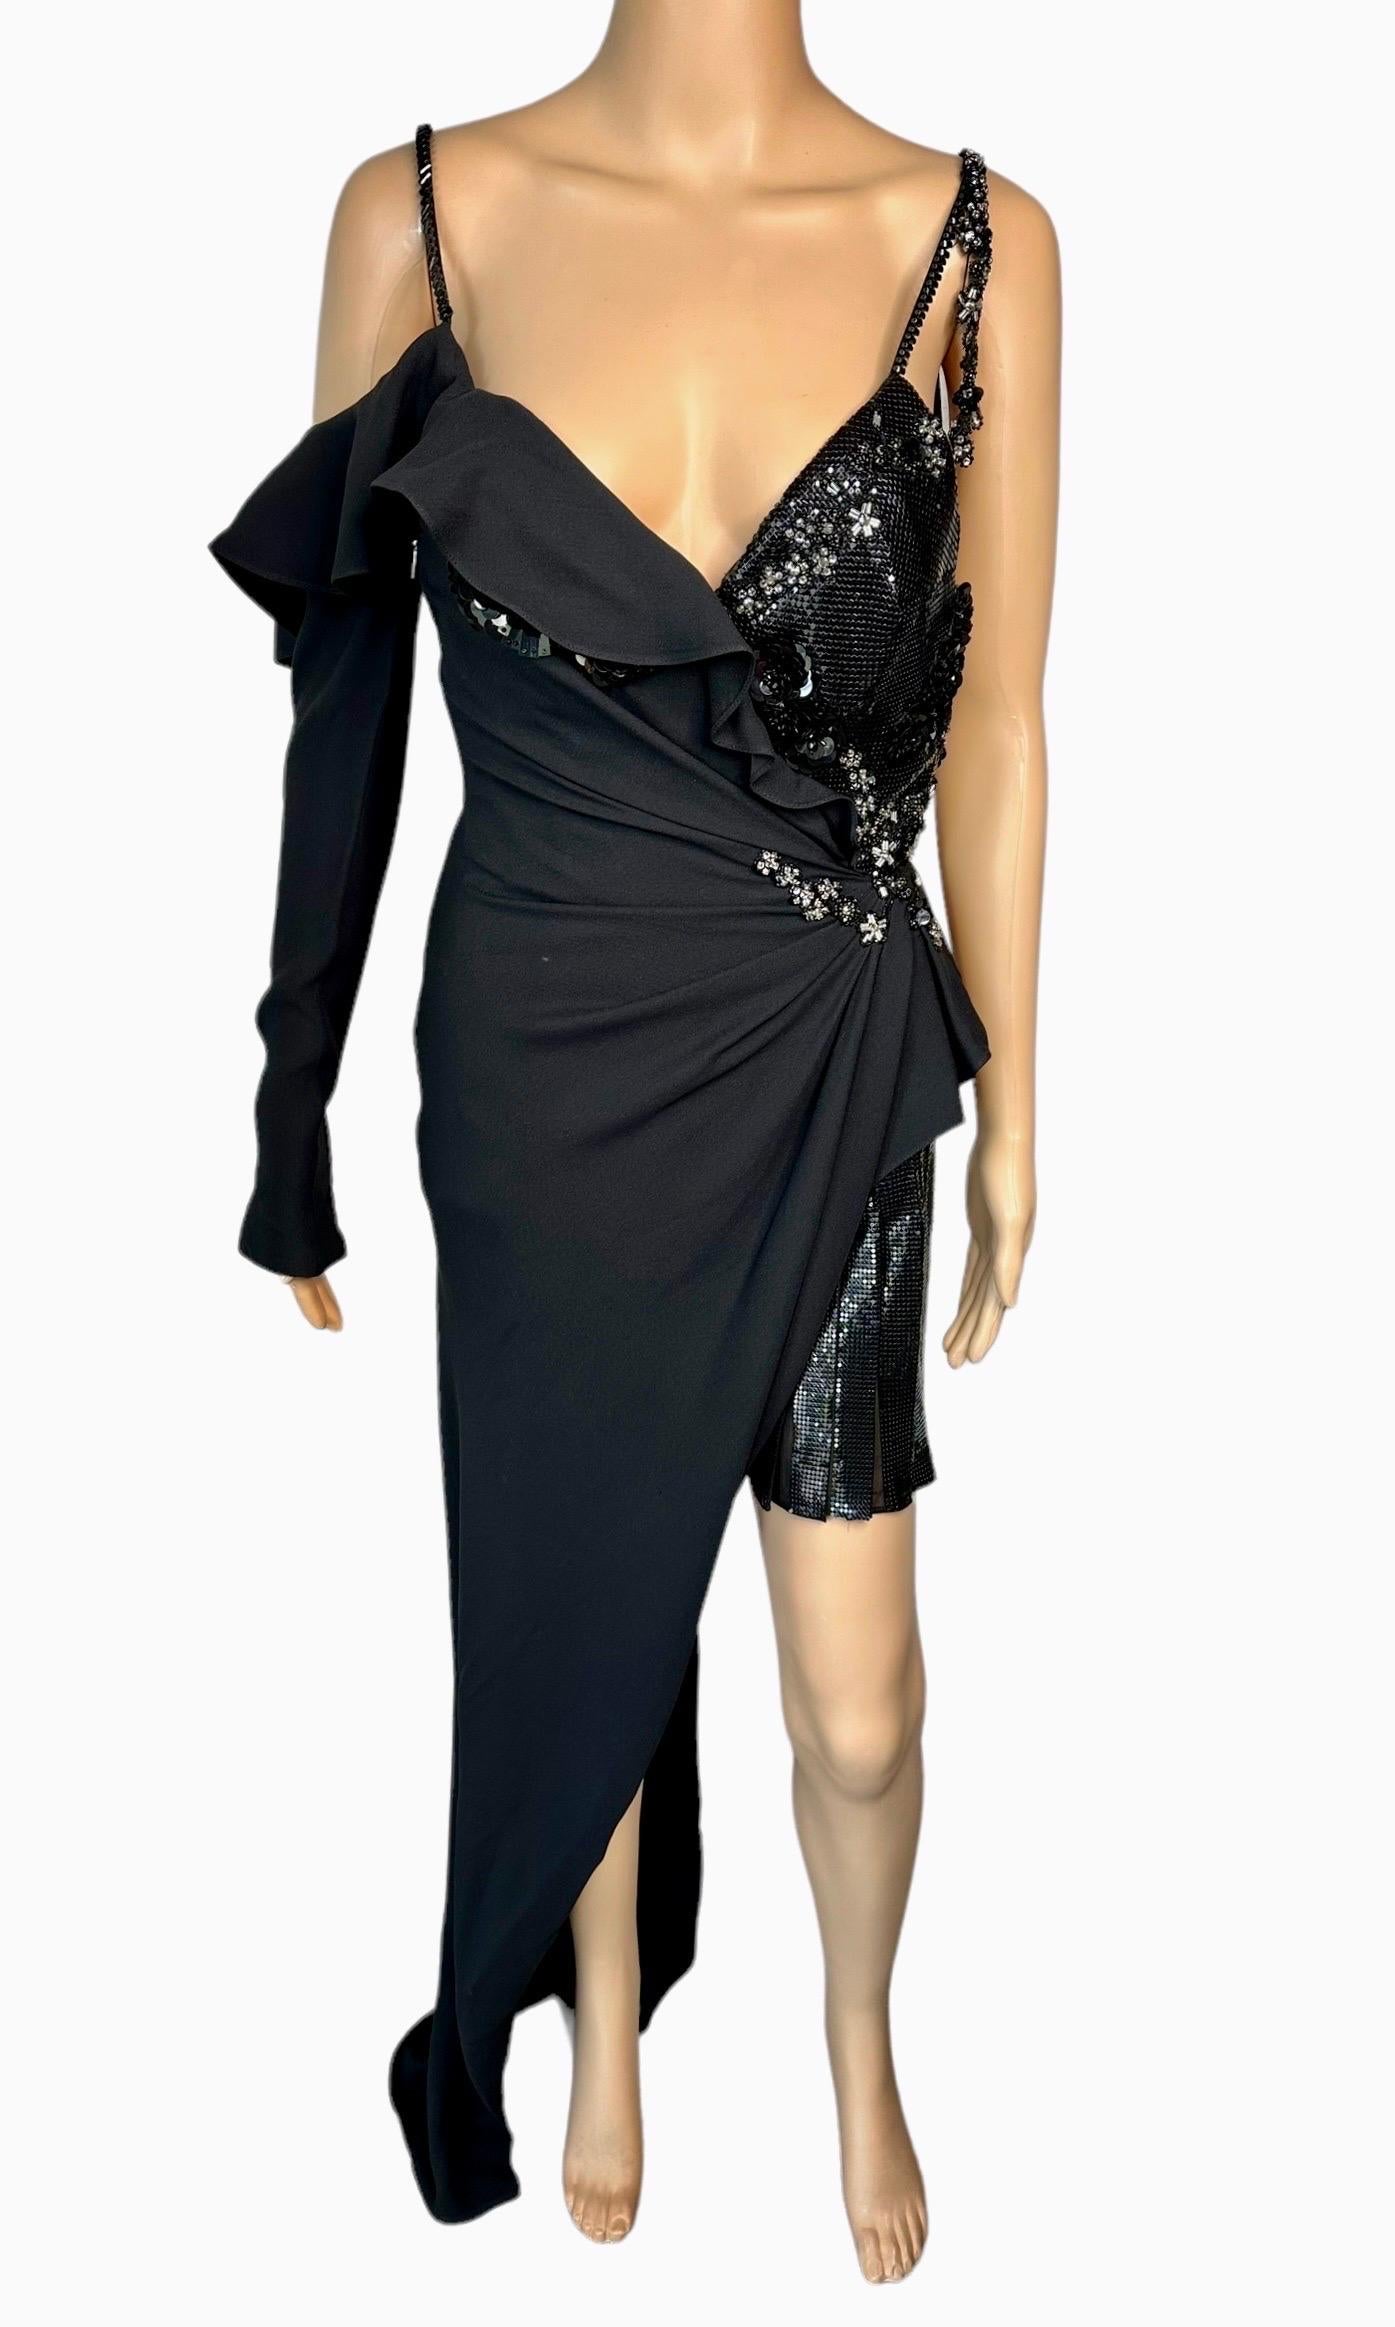 Versace F/W 2017 Runway Chainmail Crystal Embellished Asymmetric Black Evening Dress Gown IT 40

Look 53 de la Collectional de l'automne 2017



